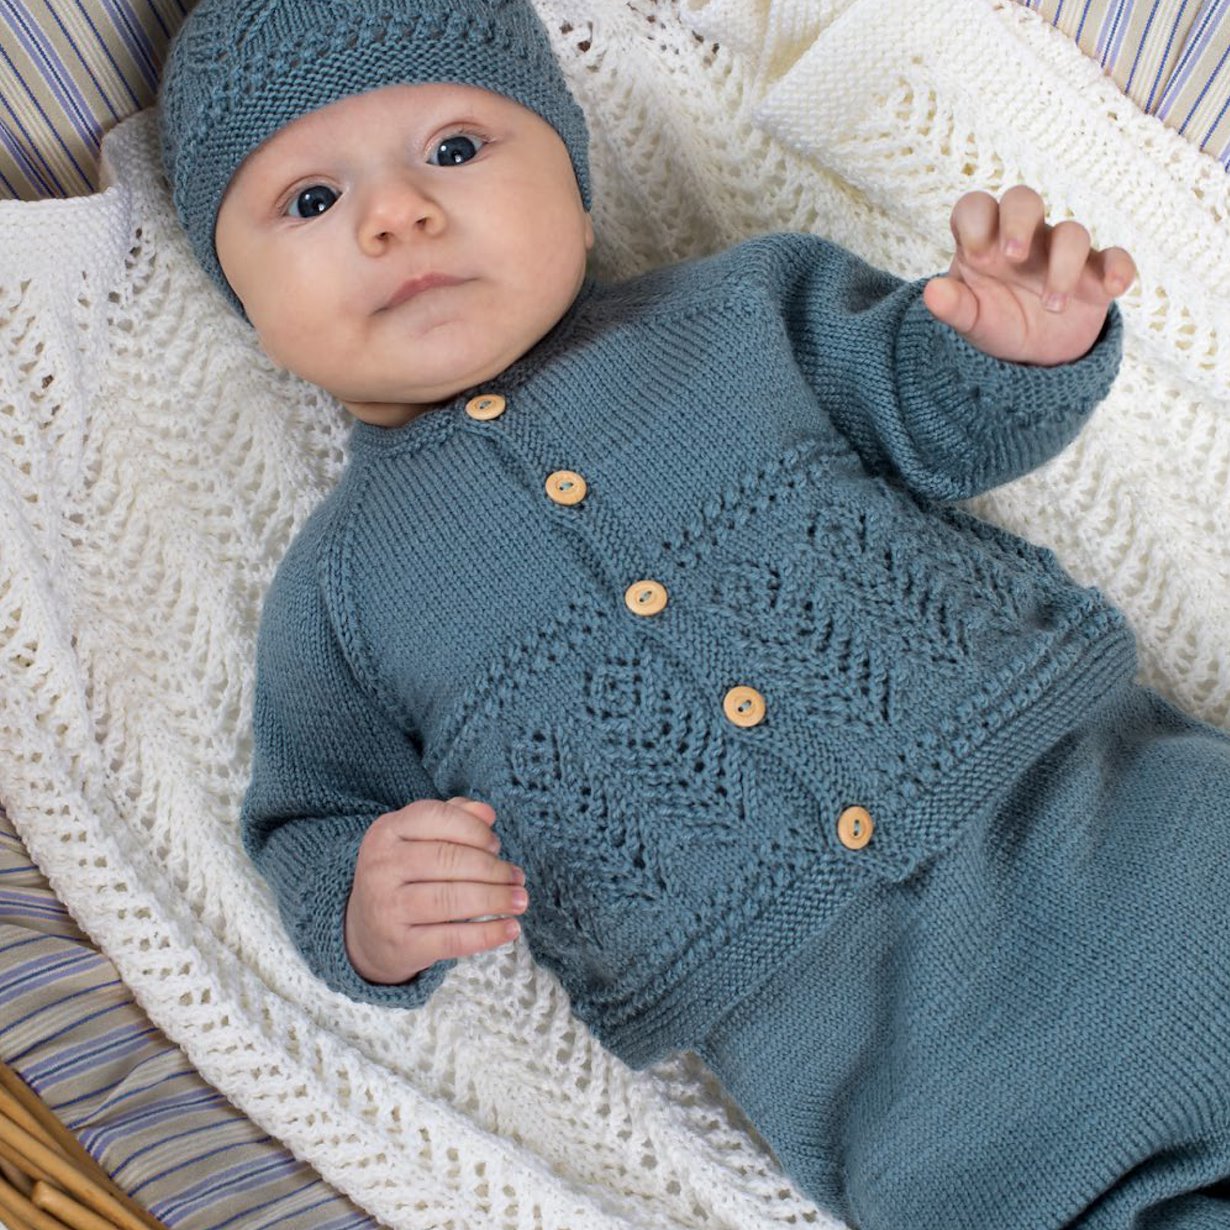 DIY this Dale yarn, knitting pattern – Millian & Milla Newborn Set ...